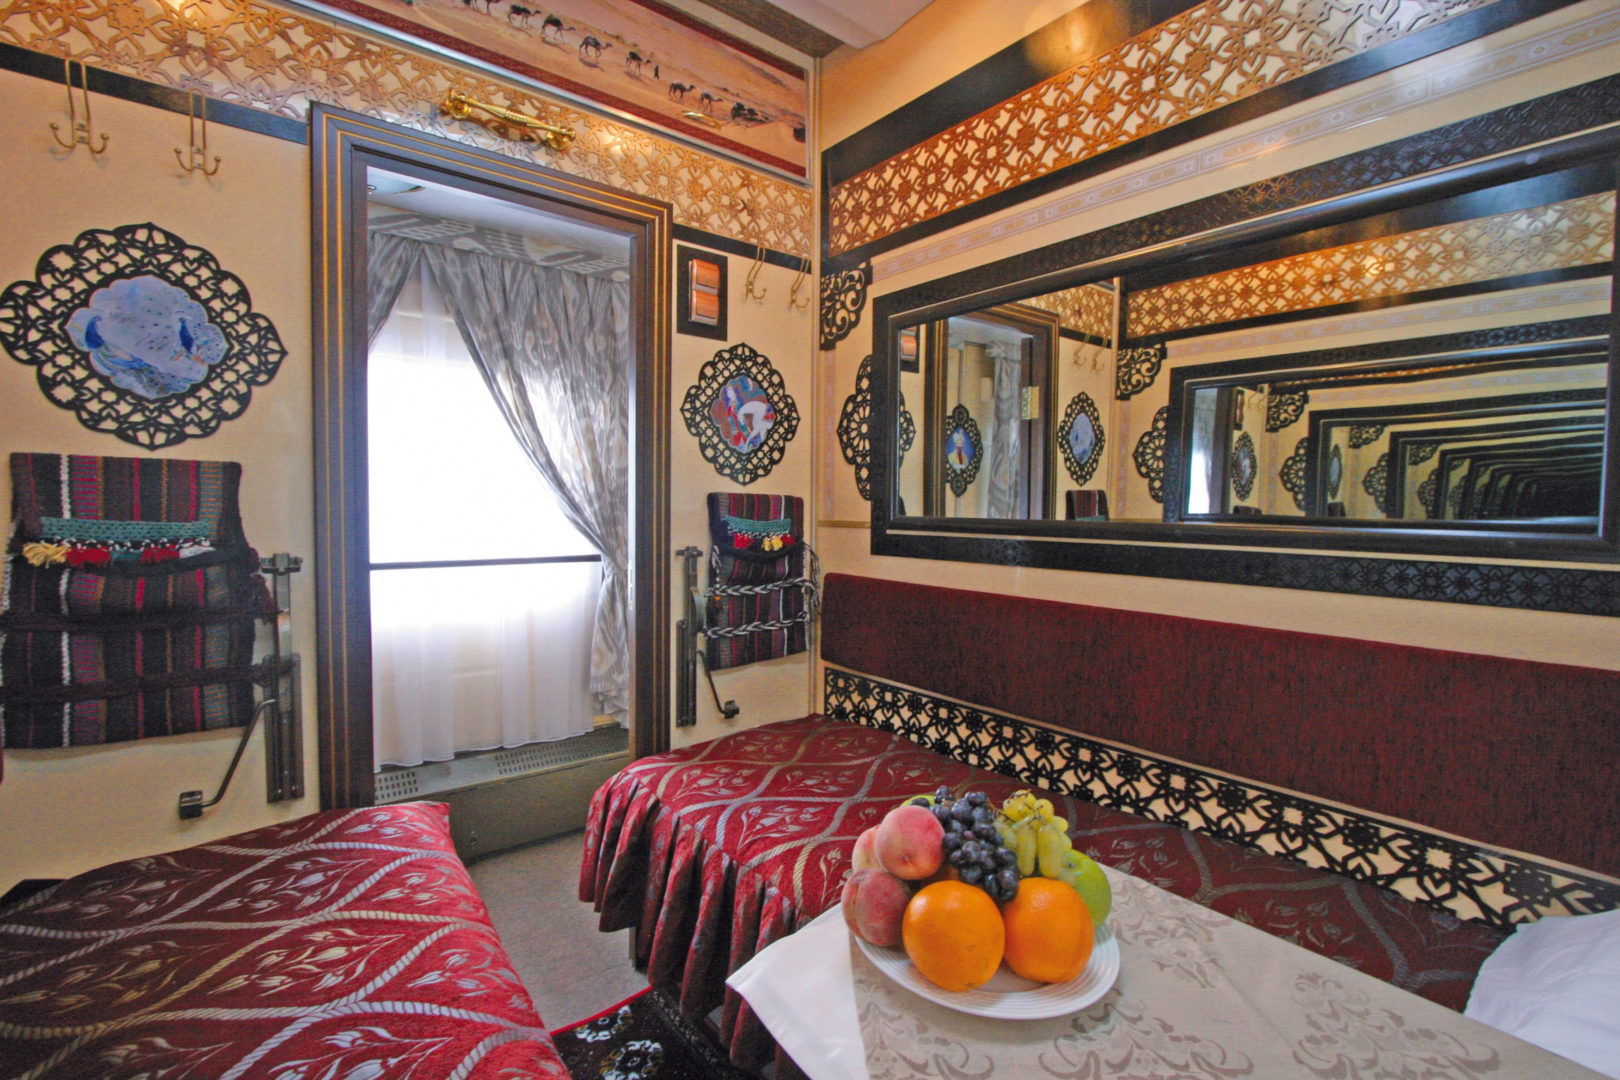 Kabine der Kategorie Aladin im Orient Silk Road Express, Reise entlang der Seidenstraße